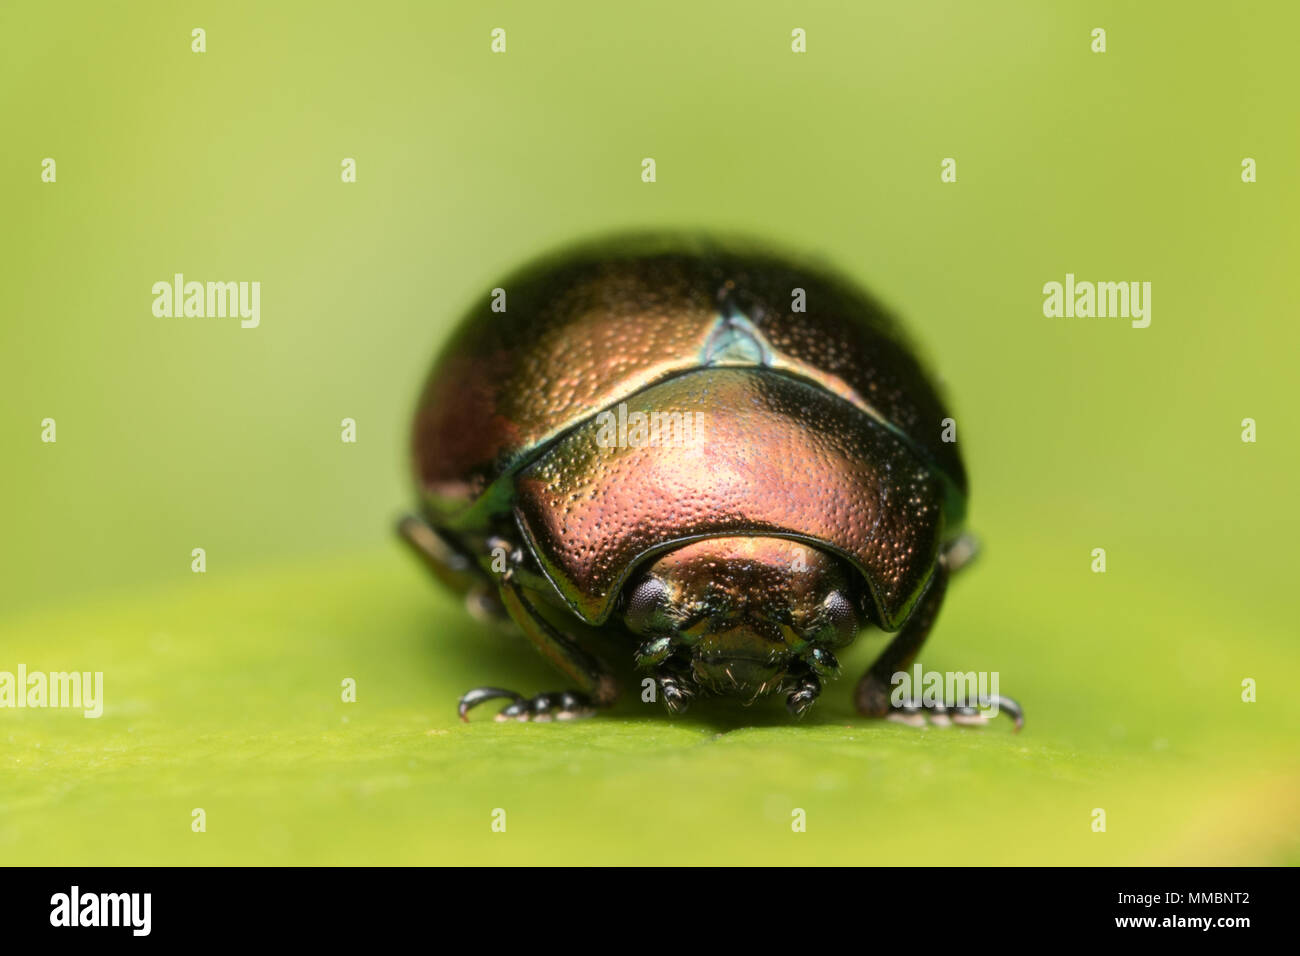 Vorderansicht des Blattes Käfer (Chrysolina varians) in Ruhe auf Blatt. Tipperary, Irland Stockfoto